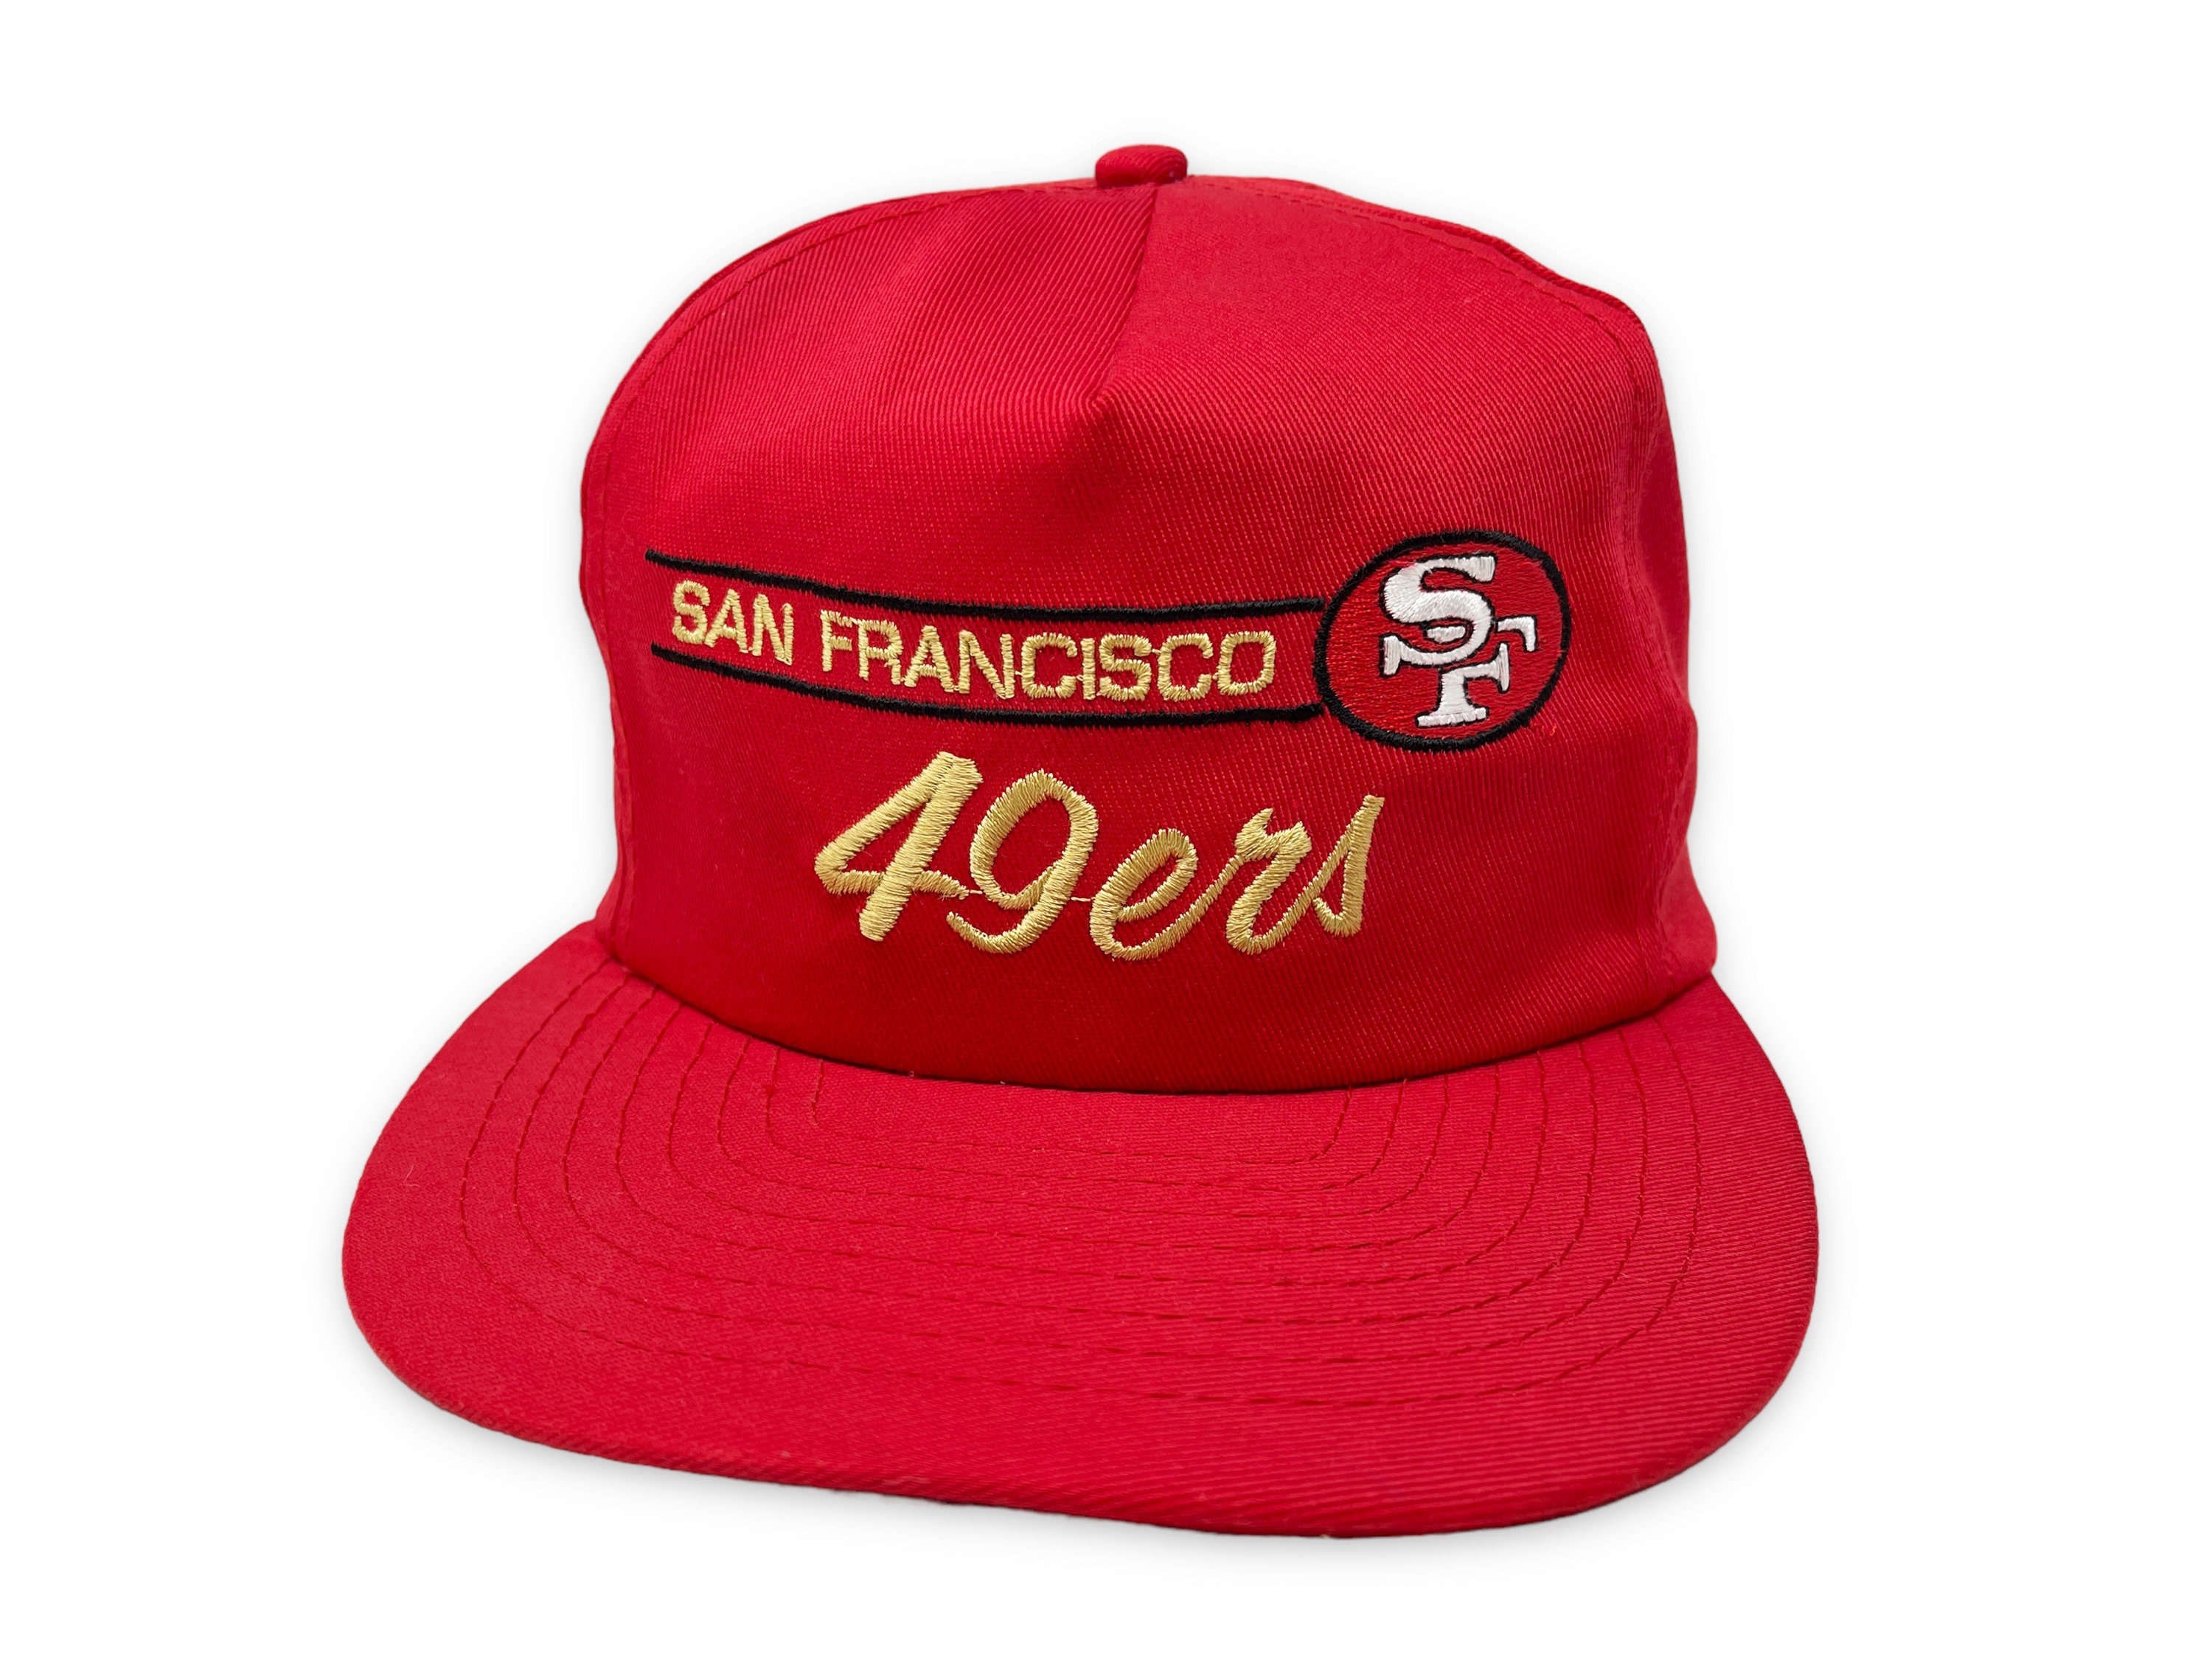 Vintage 49ers Hat 90s Snapback Cap San Francisco NFL American